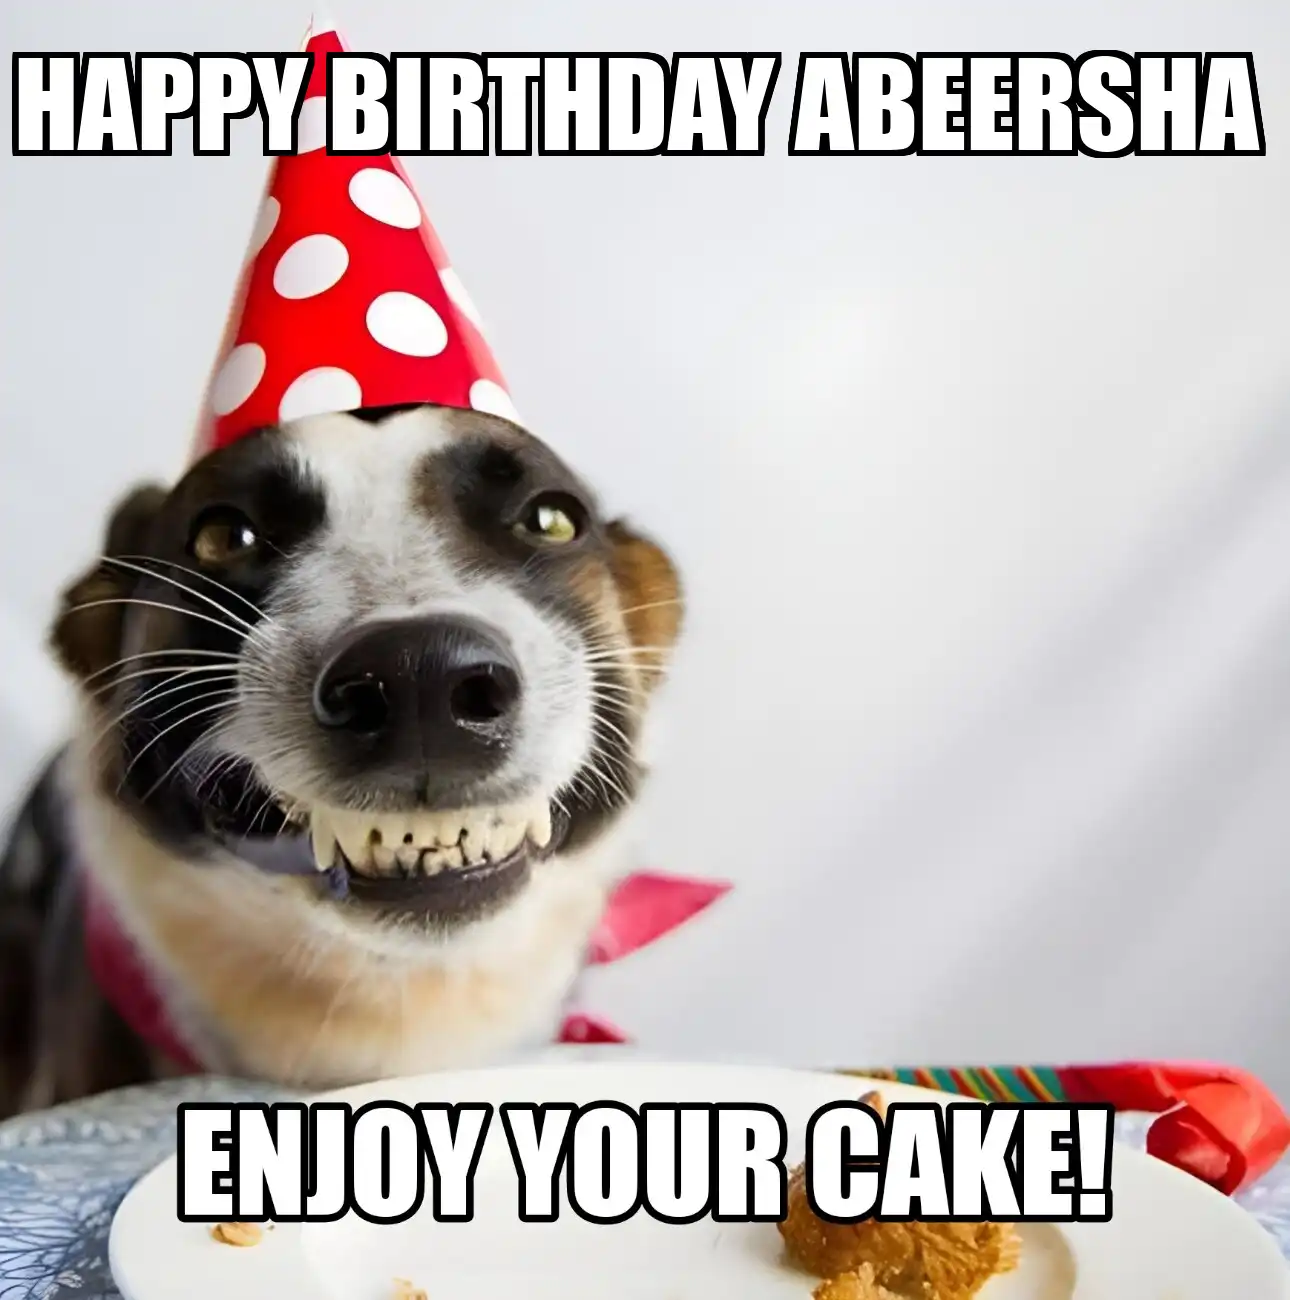 Happy Birthday Abeersha Enjoy Your Cake Dog Meme